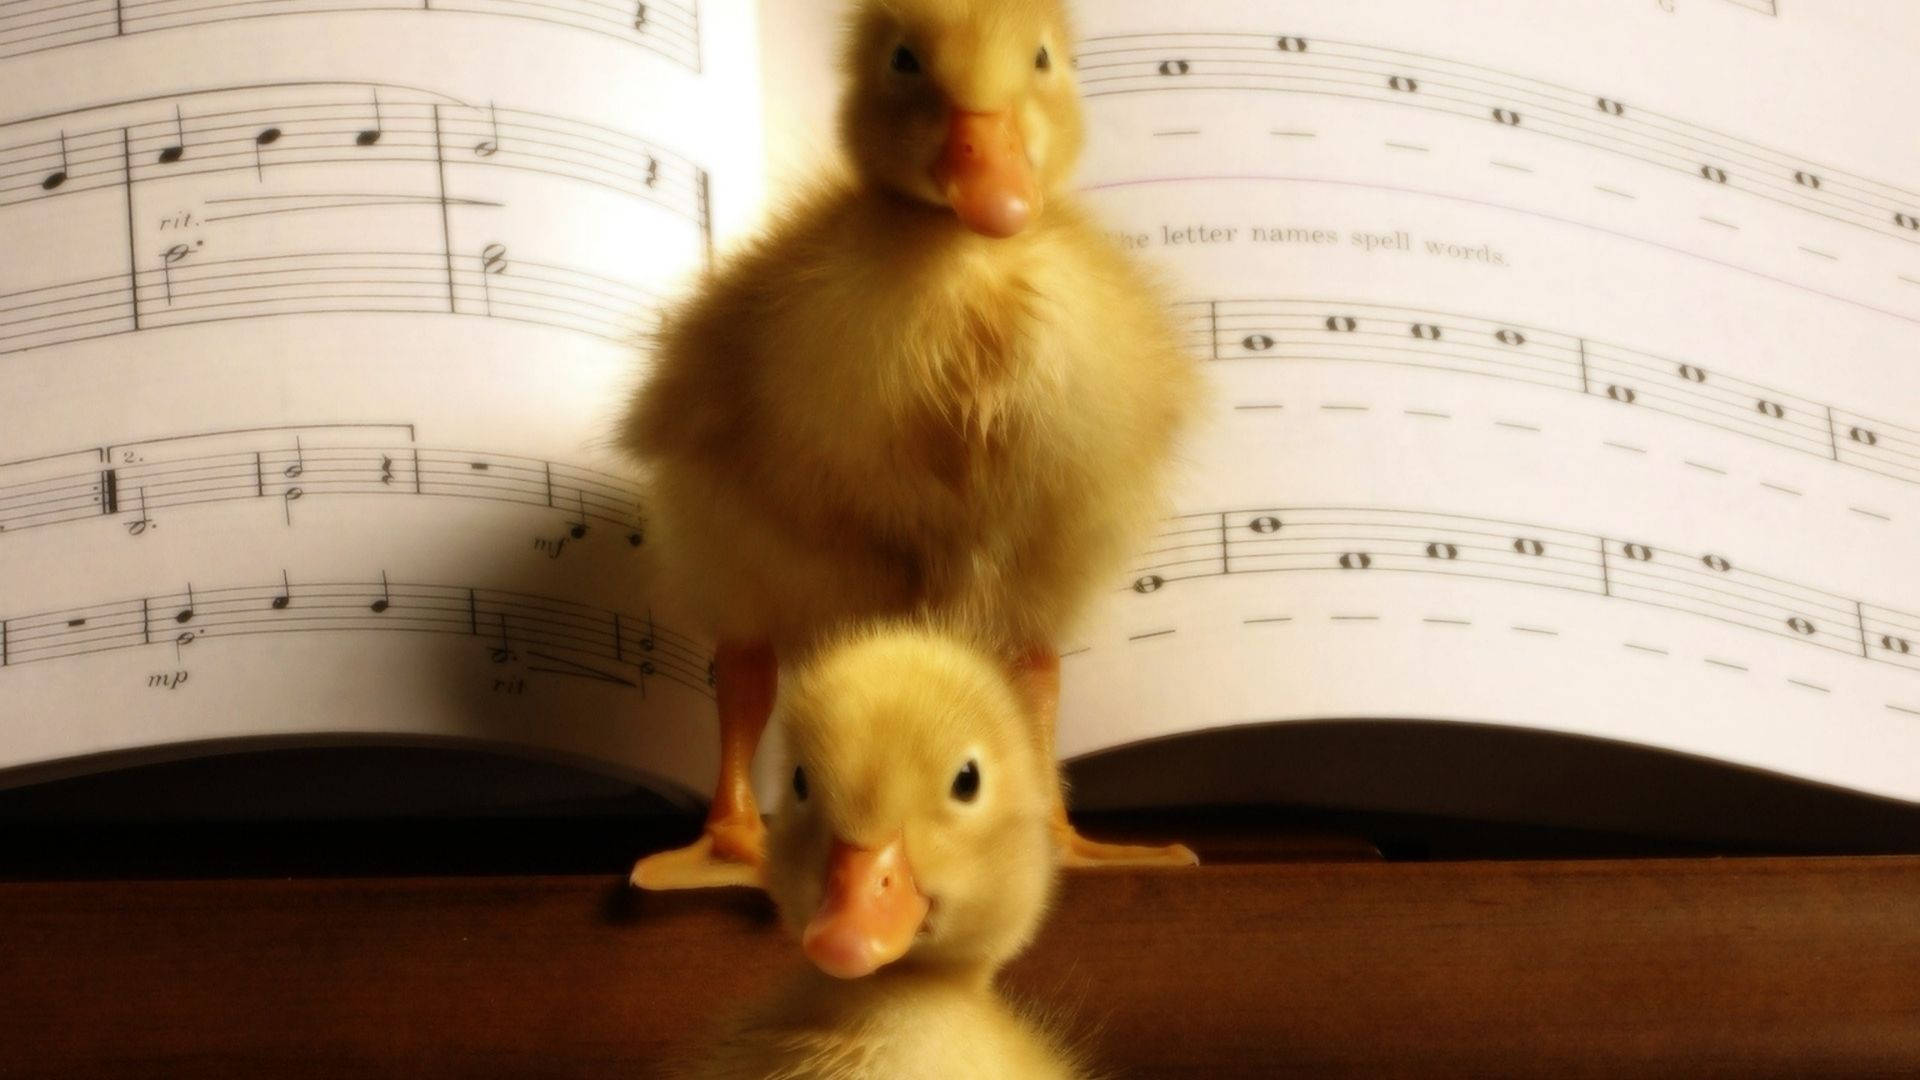 Baby Ducks Musical Wallpaper